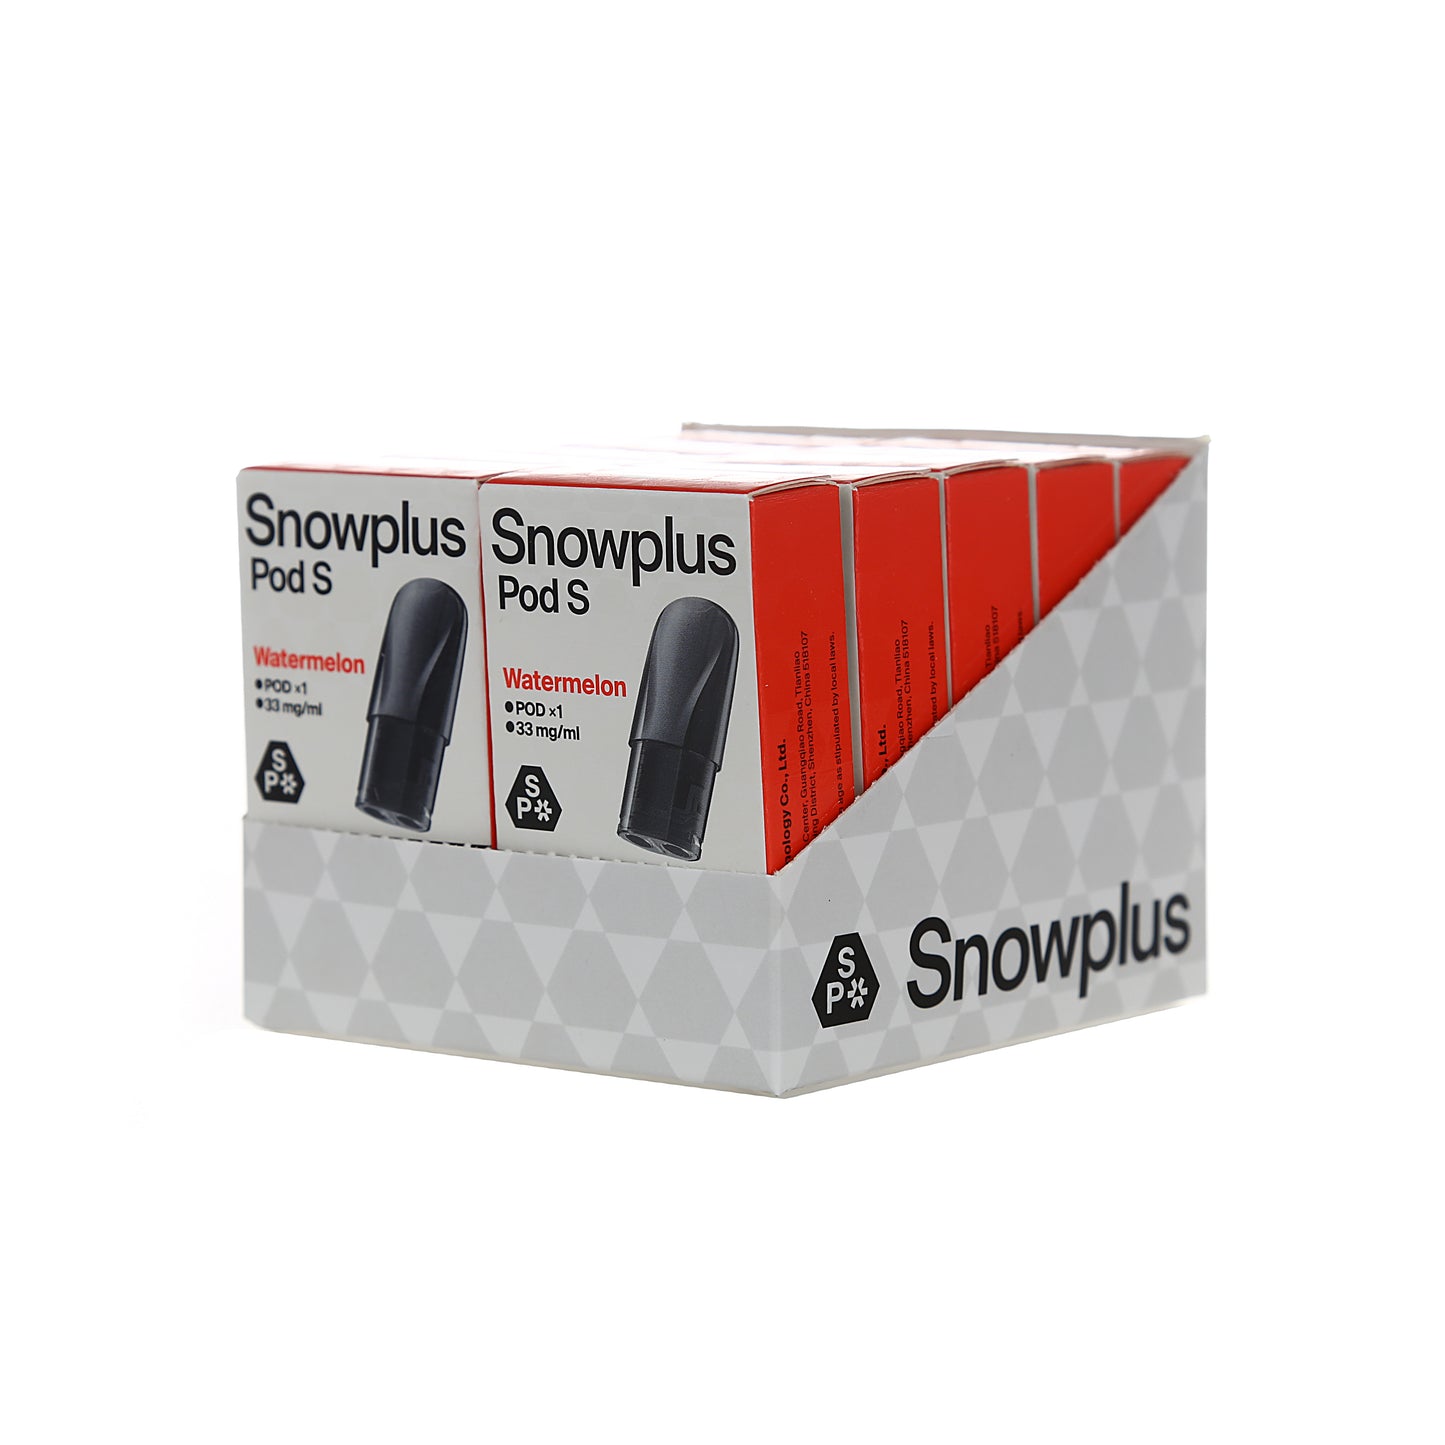 Snowplus Pod S Box of 10 - Multiple Flavors Pack of 1